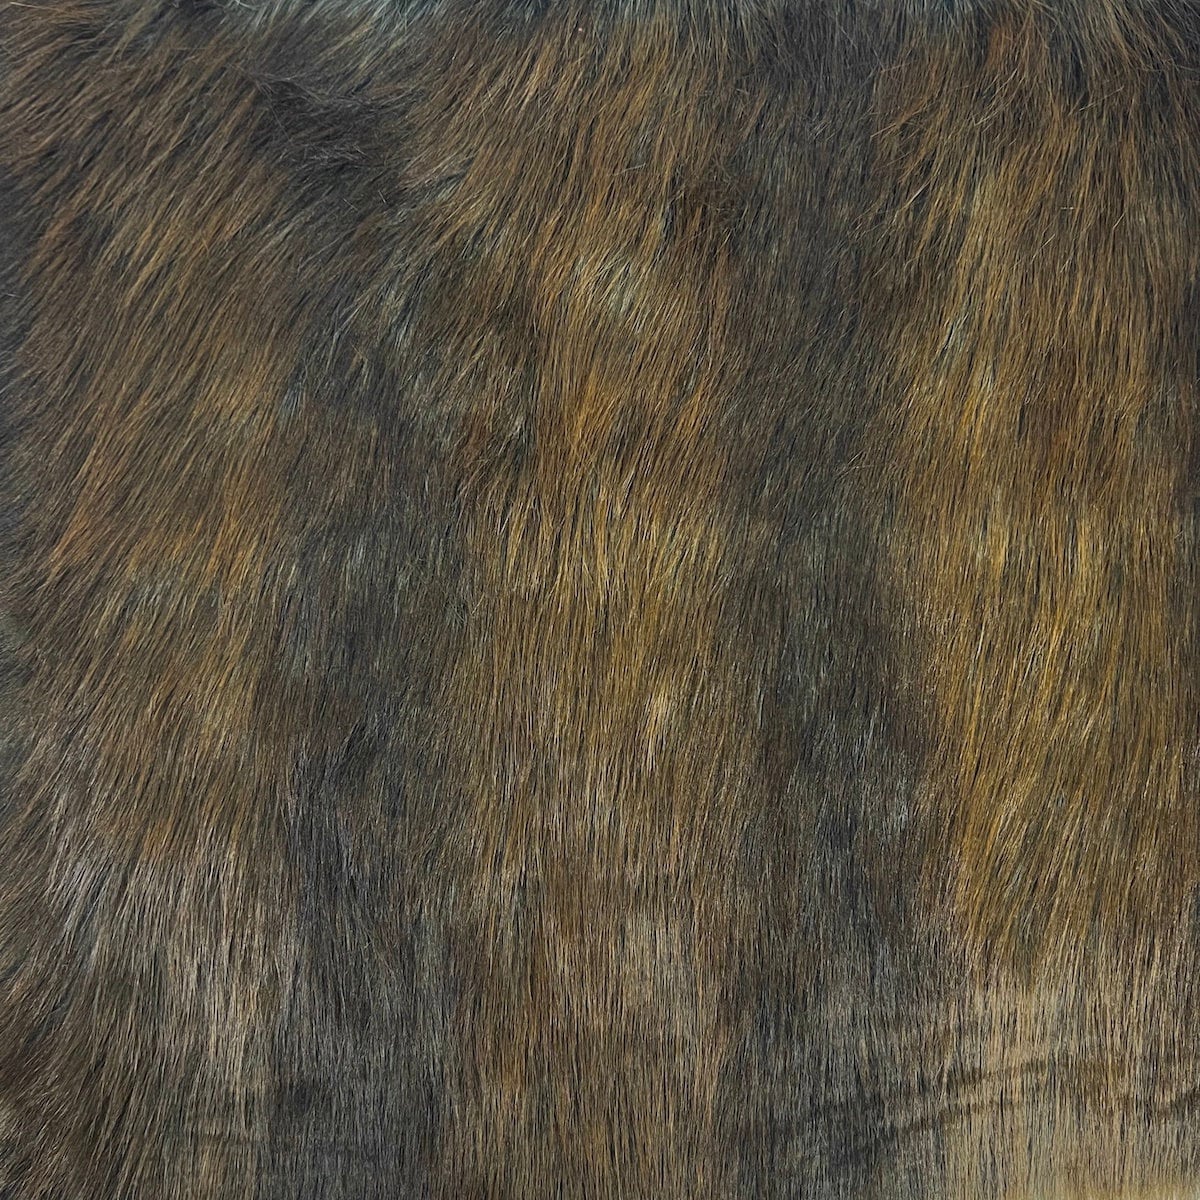 Fawn Rabbit Fur Pelt, Genuine Rabbit Fur, Ethically Sourced Natural Fur  Hide, Ginger Rabbit Pelt, Caramel Rabbit Fur, Golden Wheat 